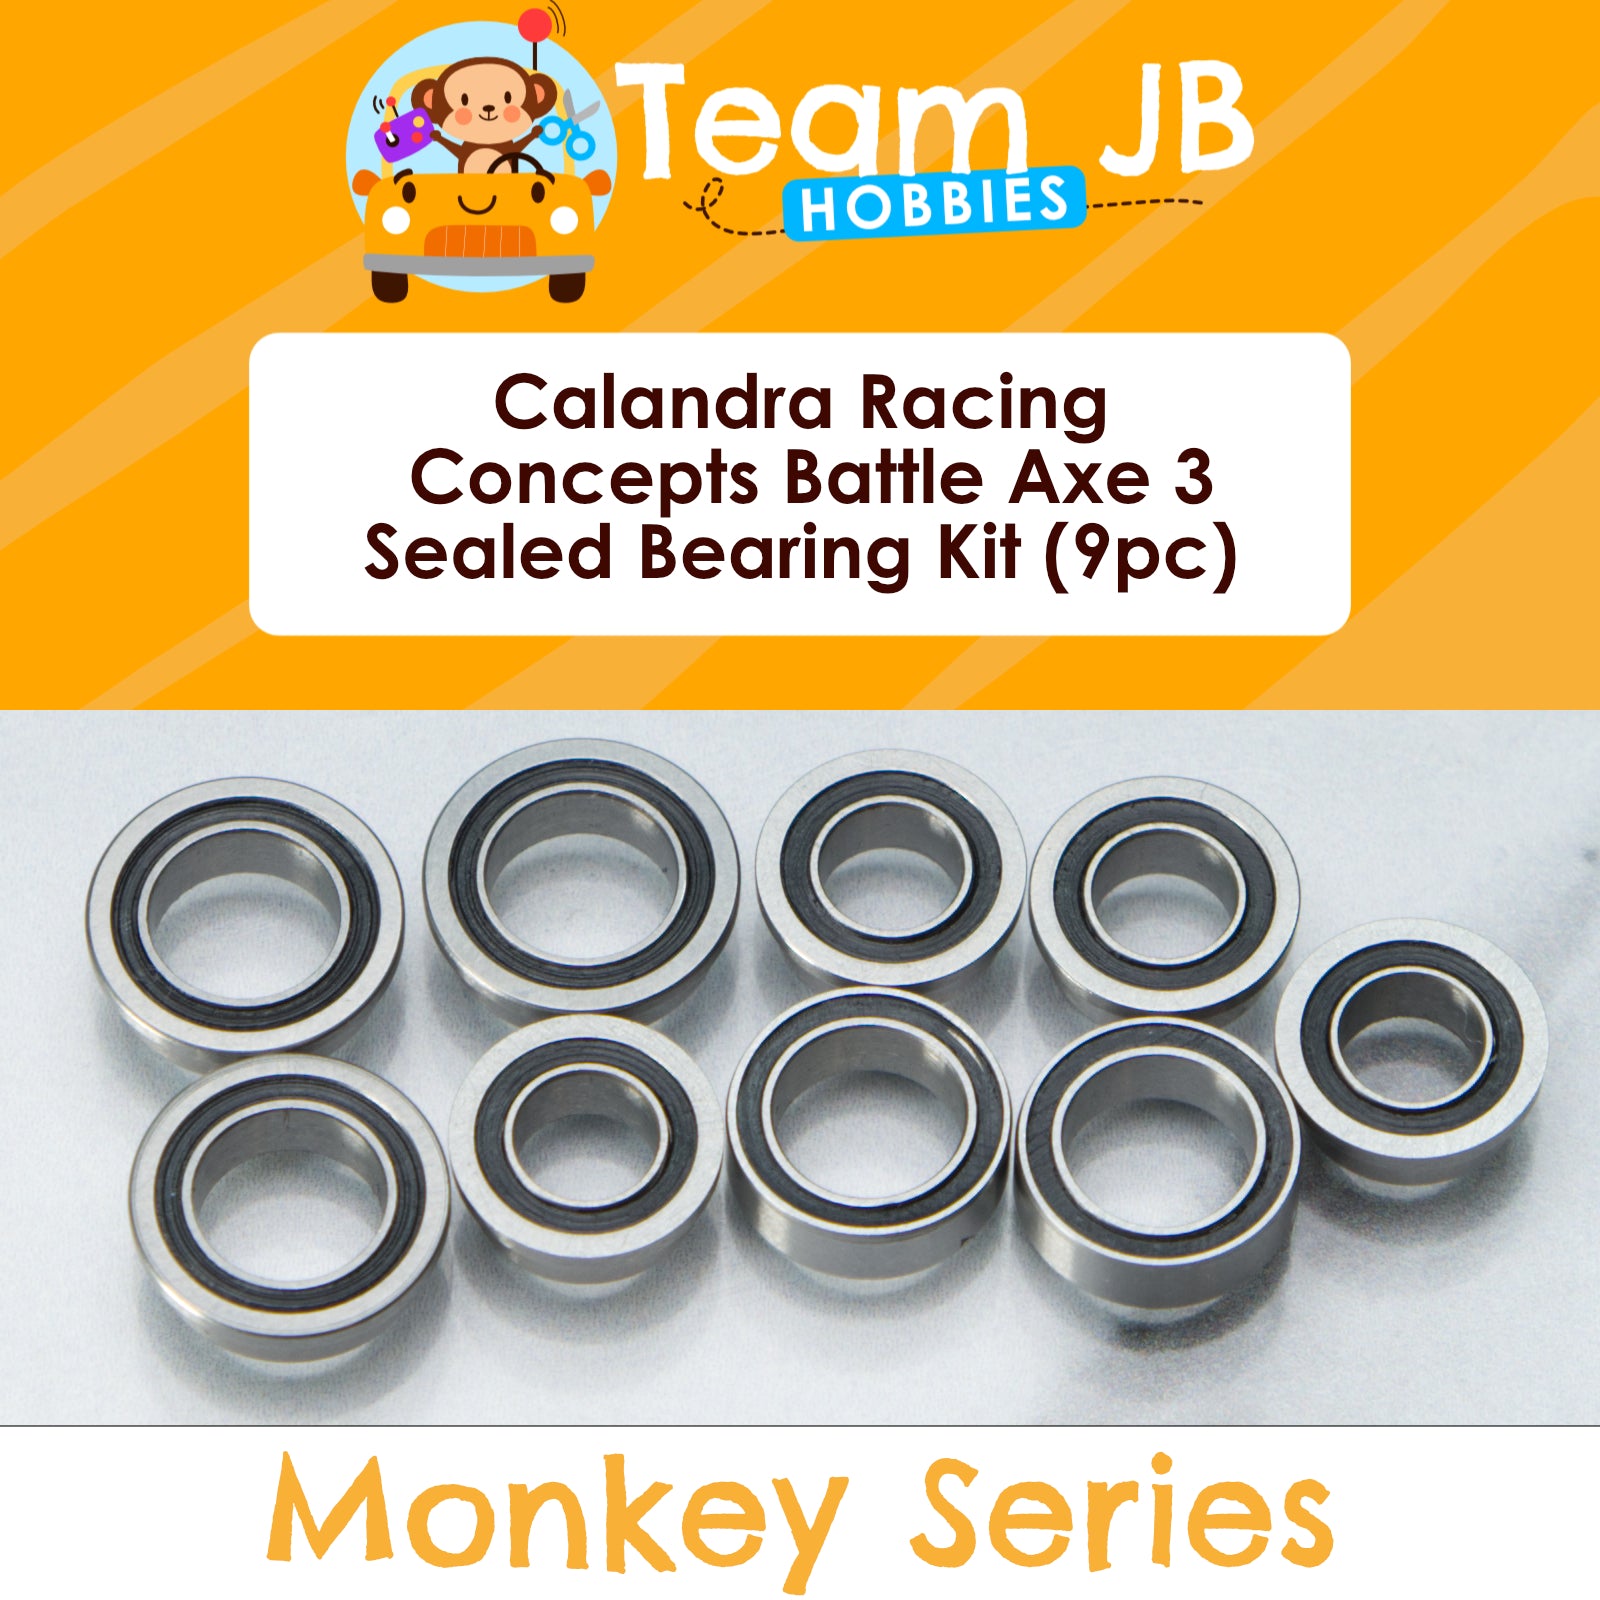 Calandra Racing Concepts Battle Axe 3 - Sealed Bearing Kit